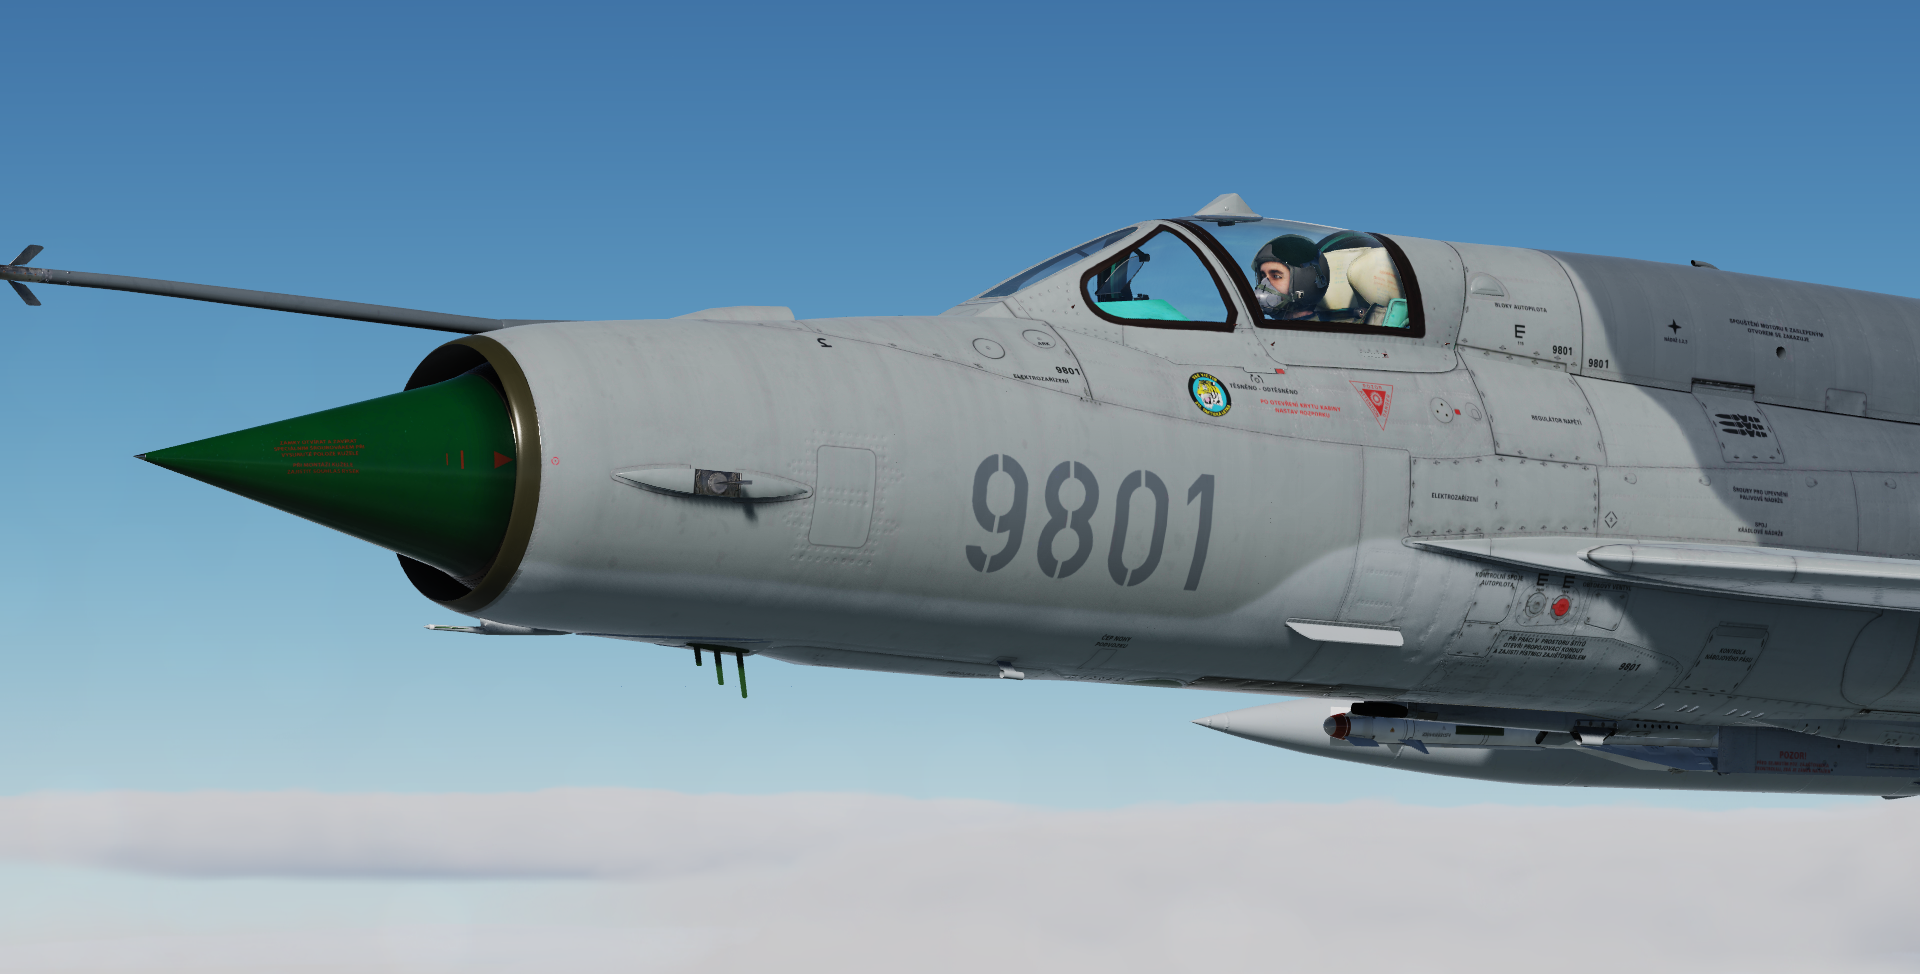 Czech Air Force MiG-21MF id 9801, udpate v.2